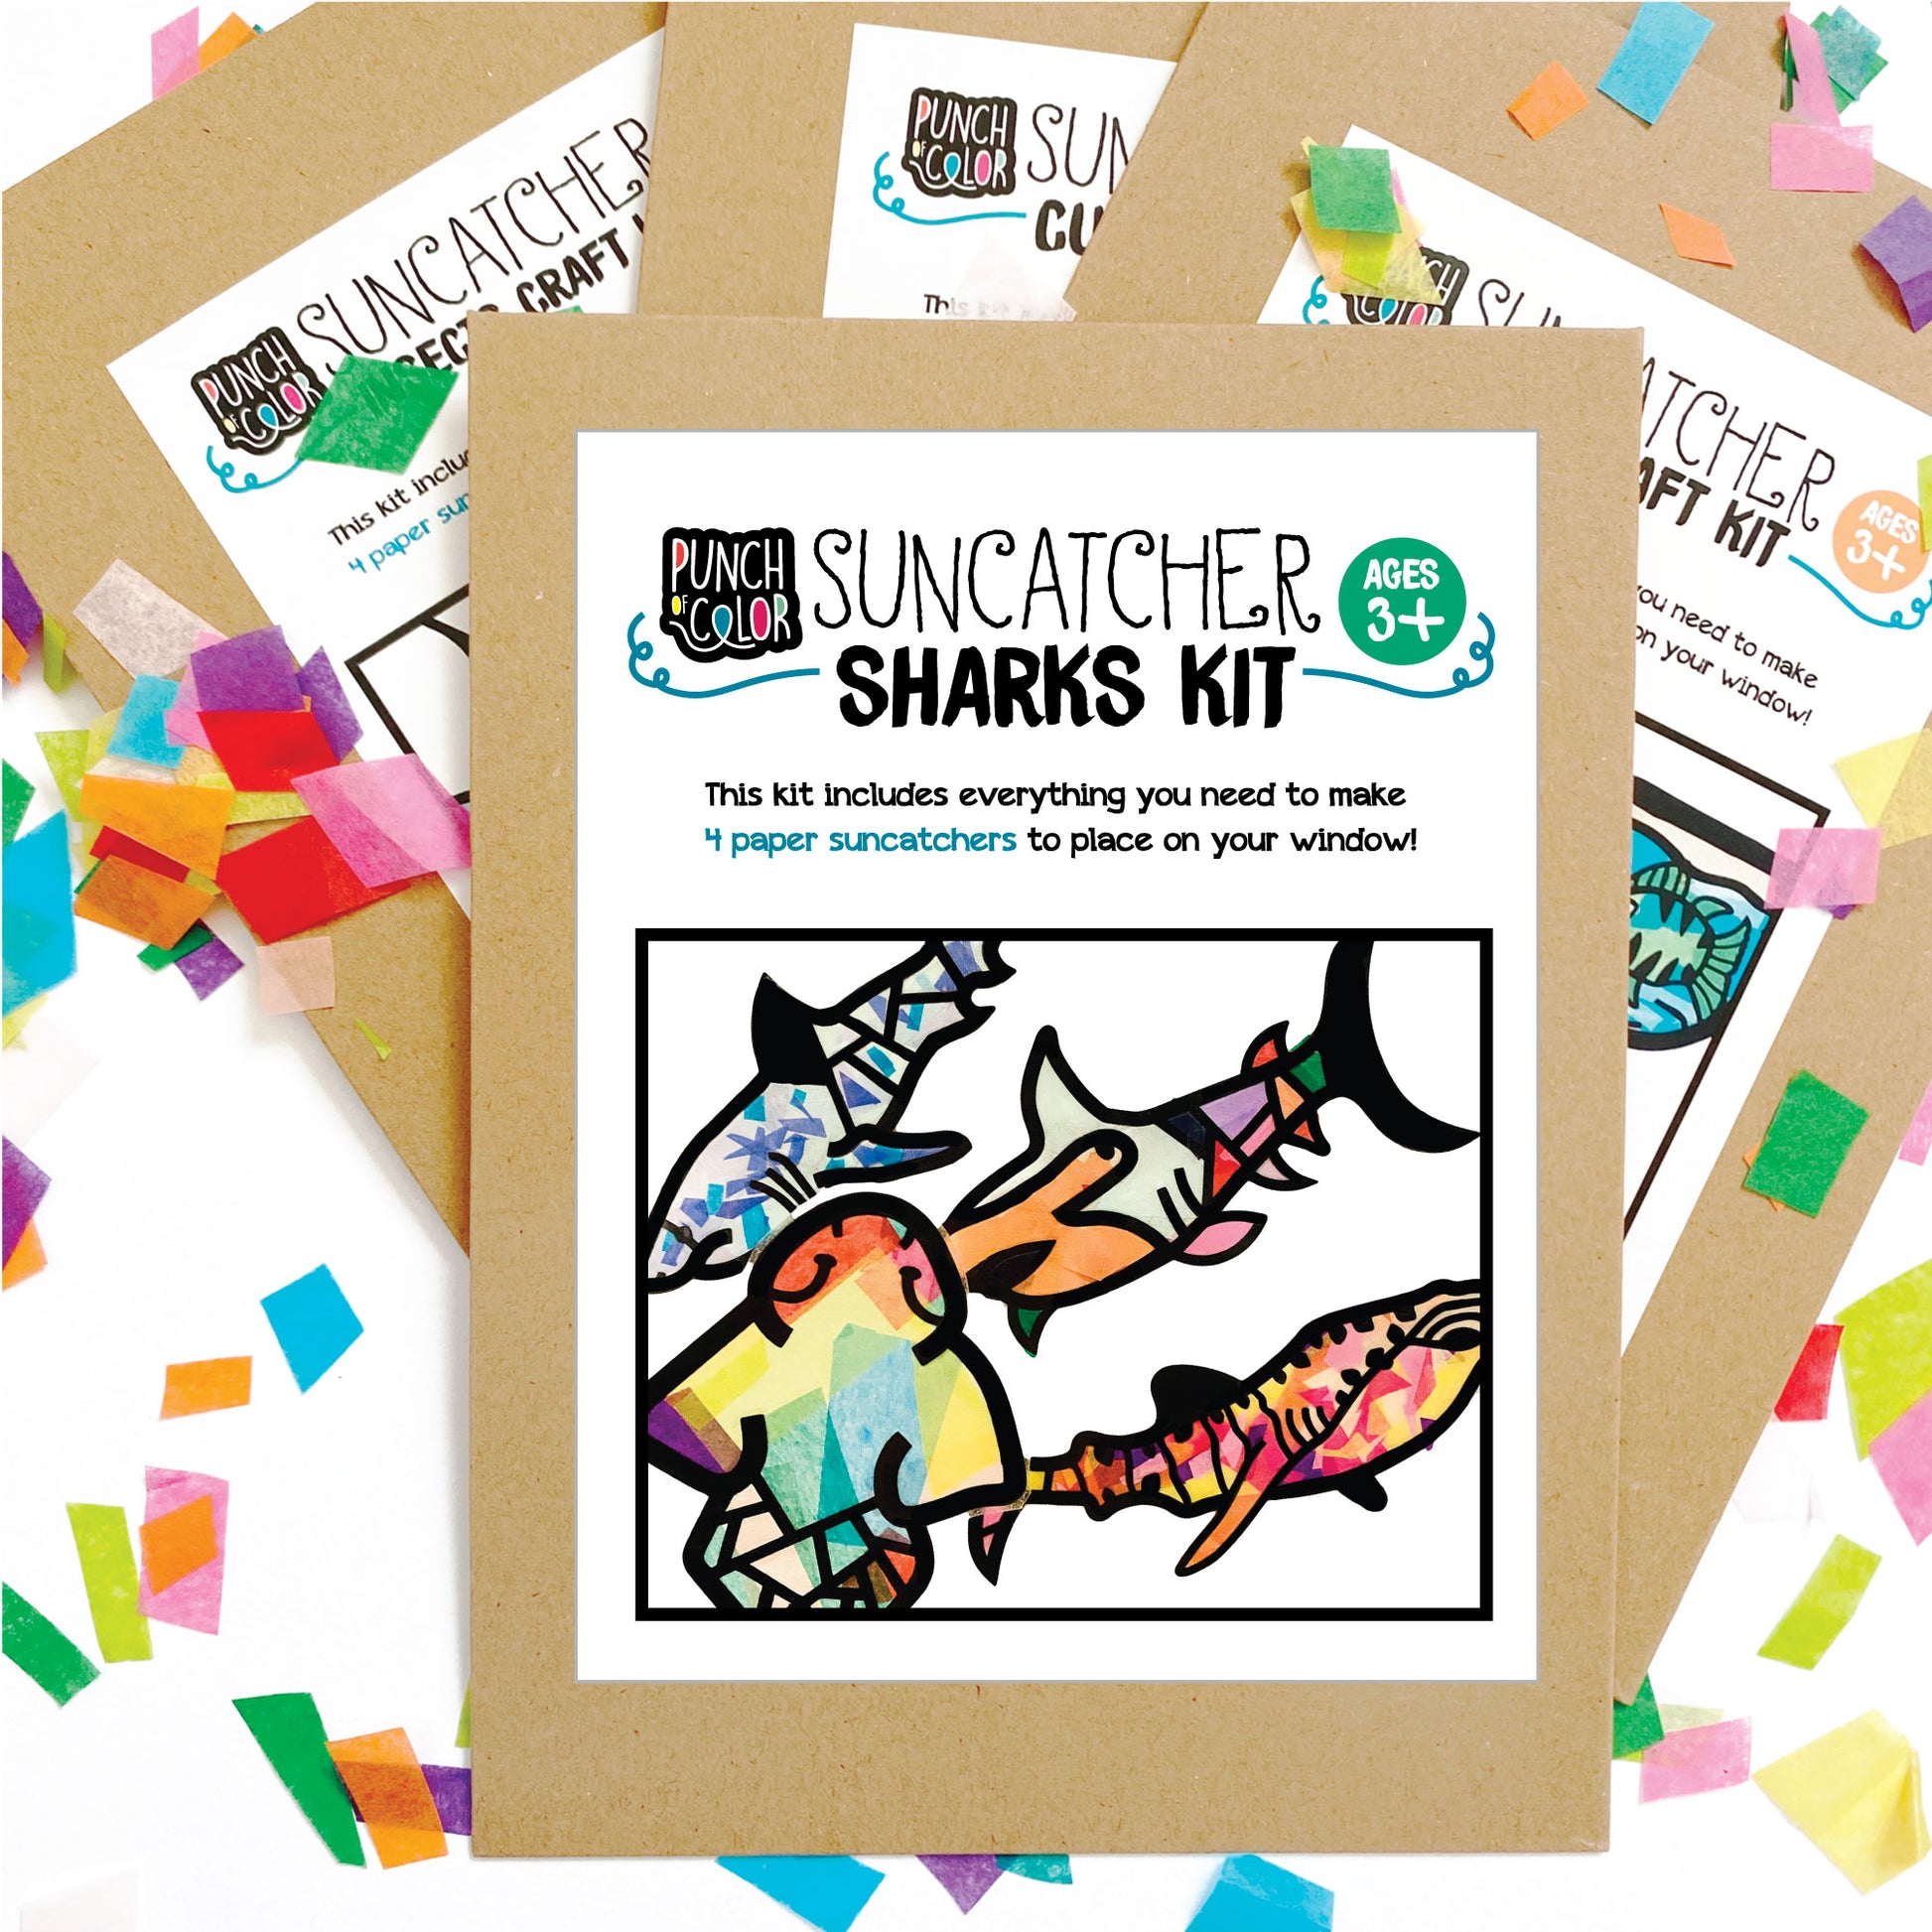 Paper sharks arts and crafts suncatcher kit for kids